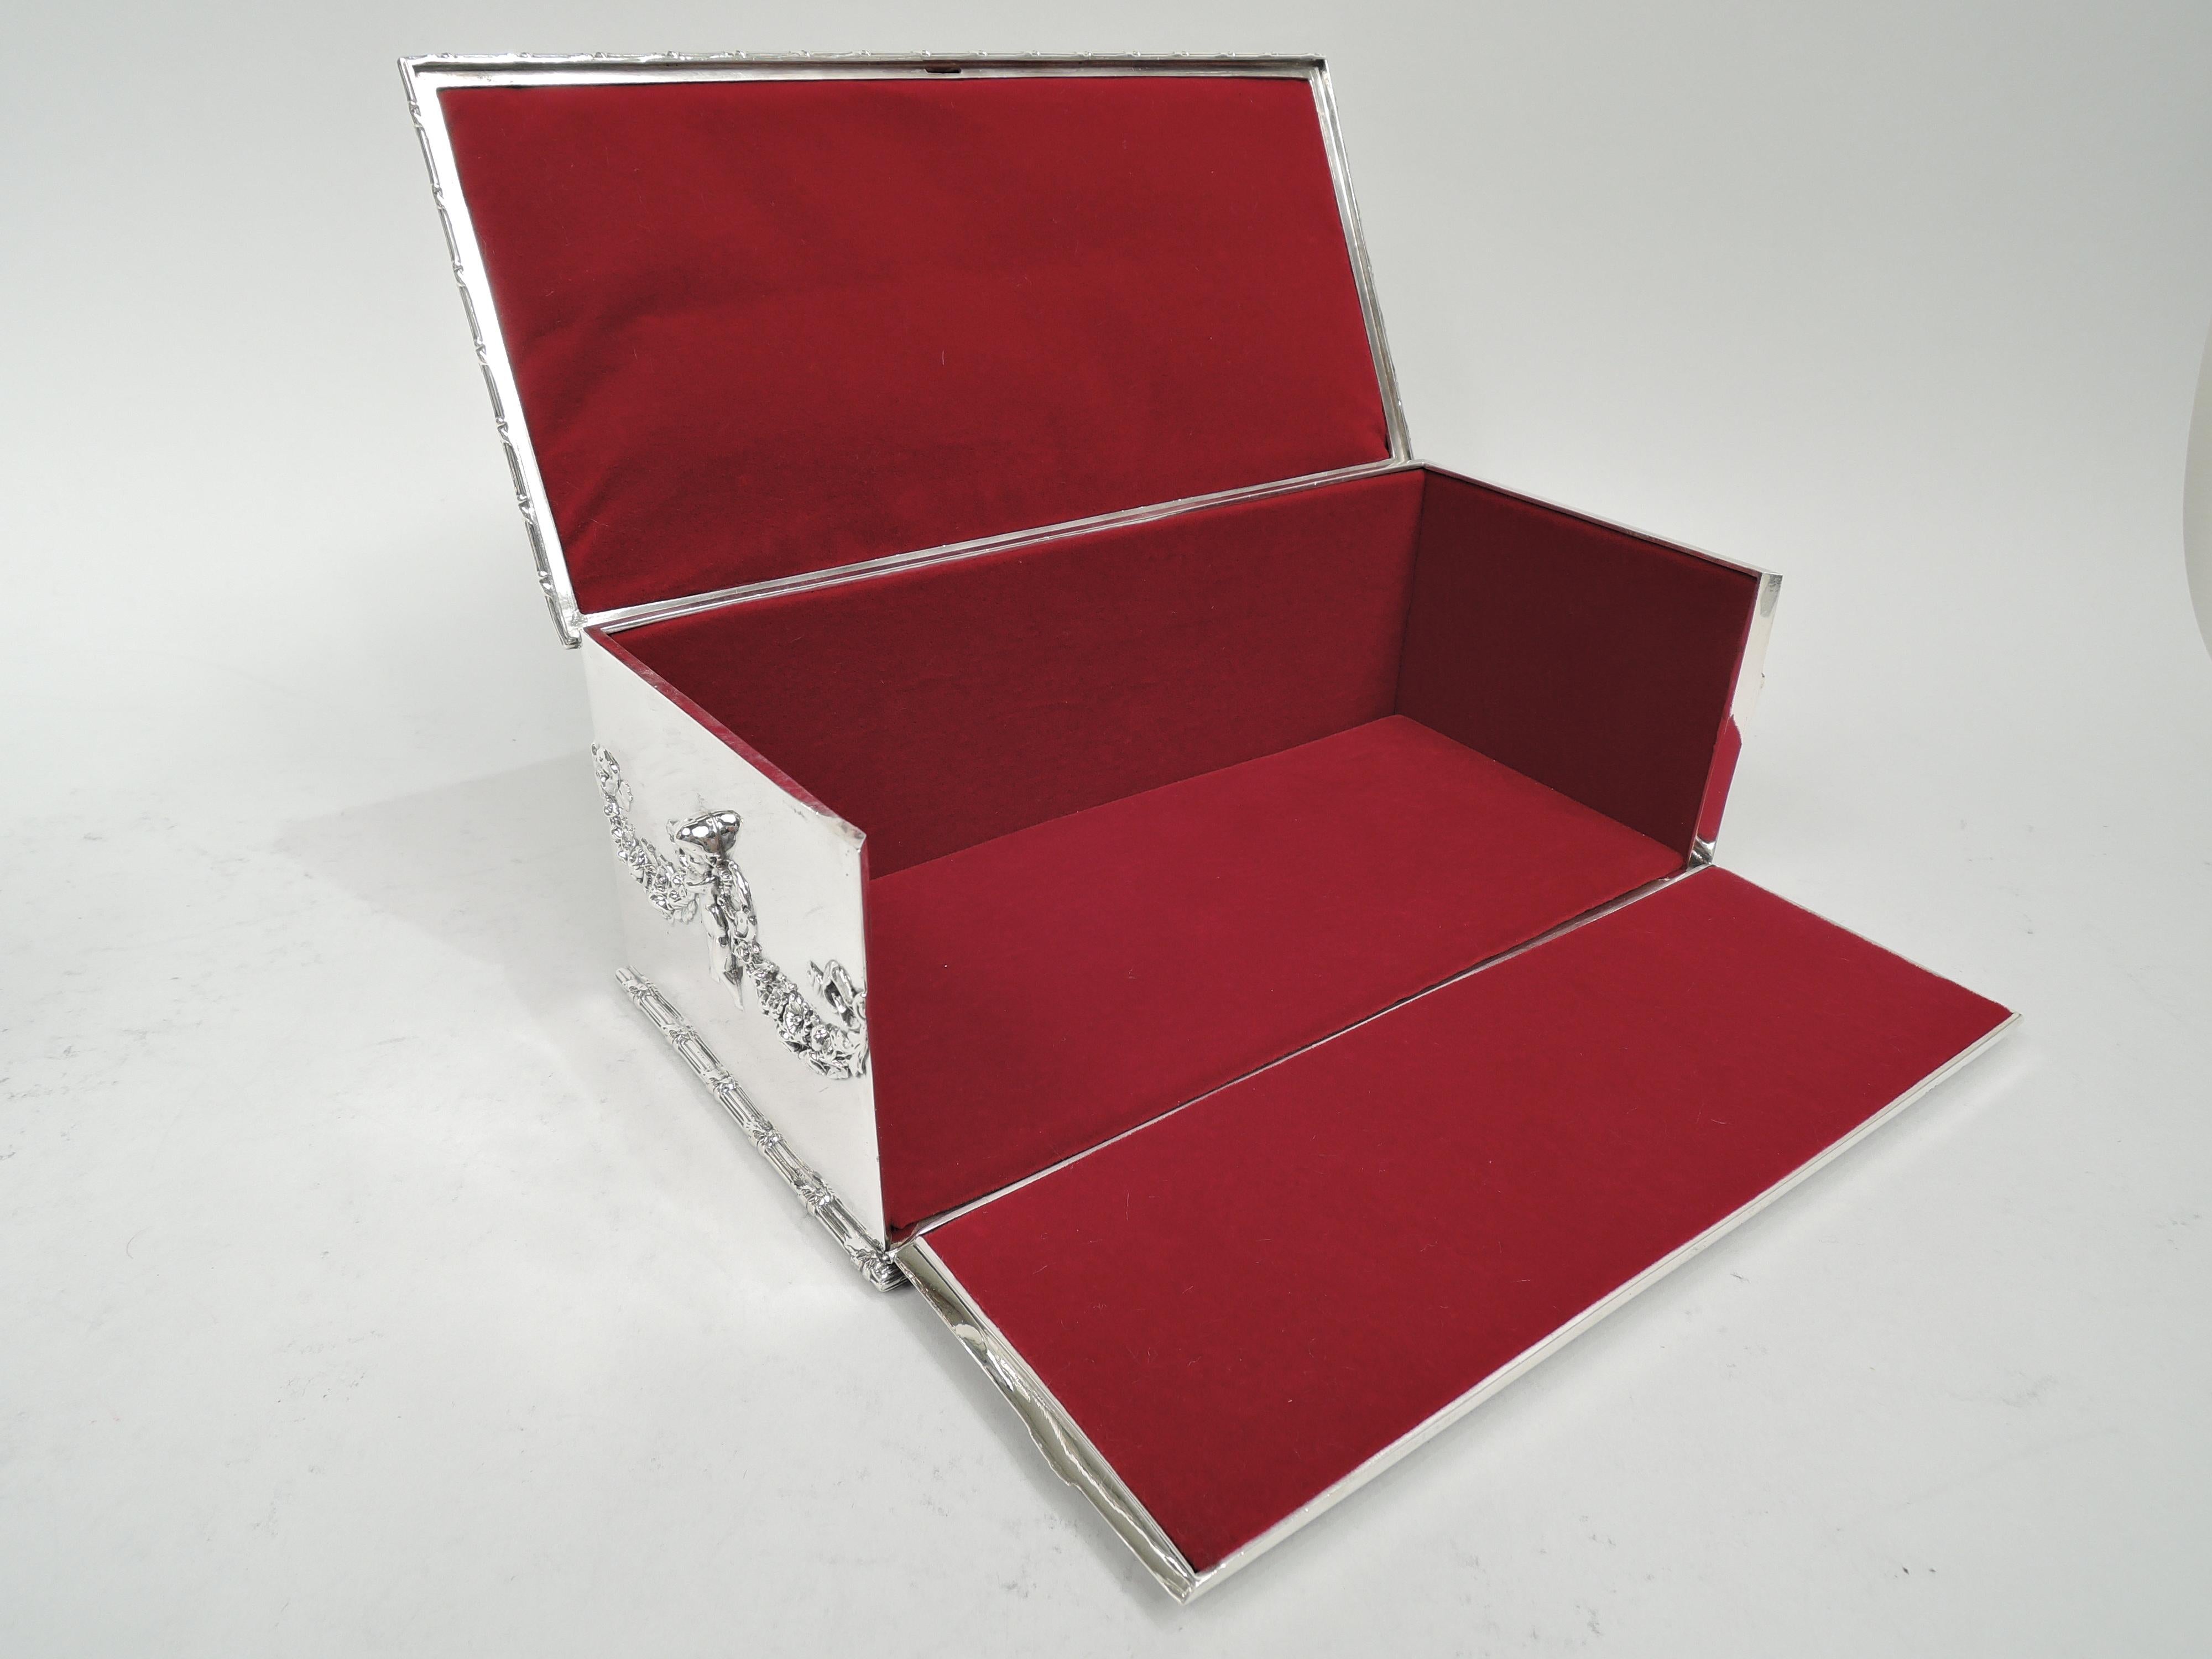 20th Century American Edwardian Regency Sterling Silver Jewelry Box with Cherubs For Sale